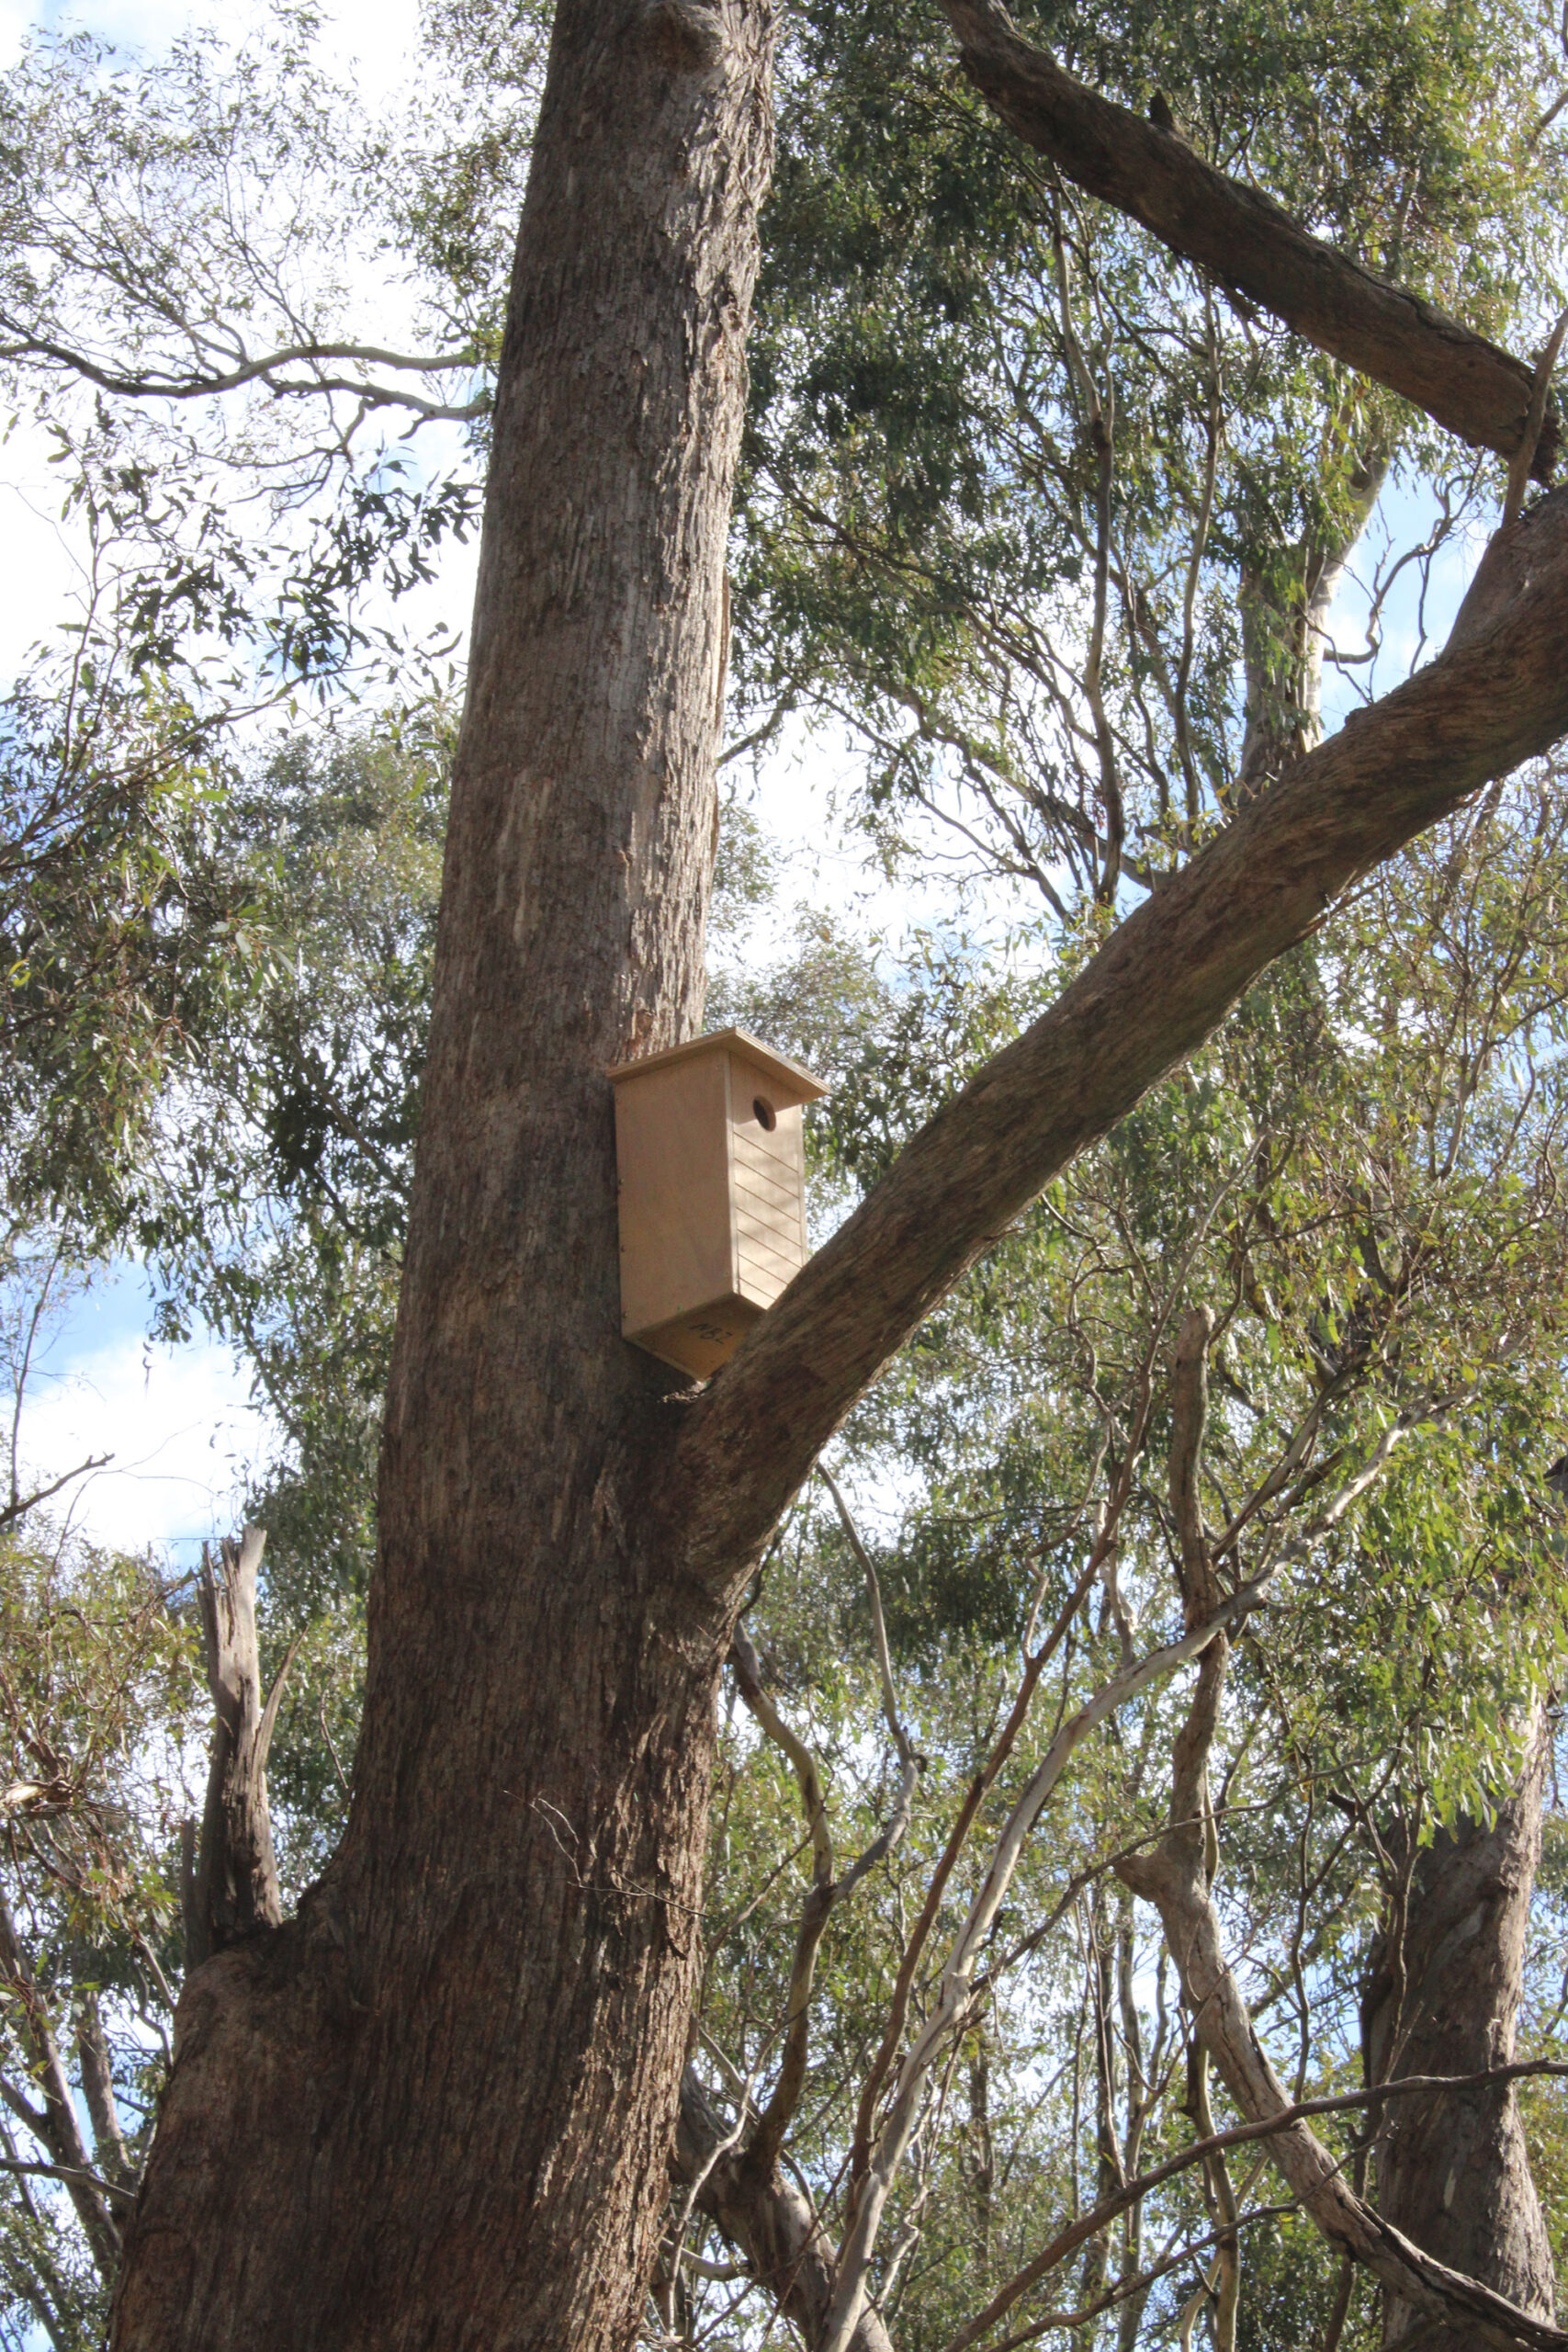 Image of nesting boxes